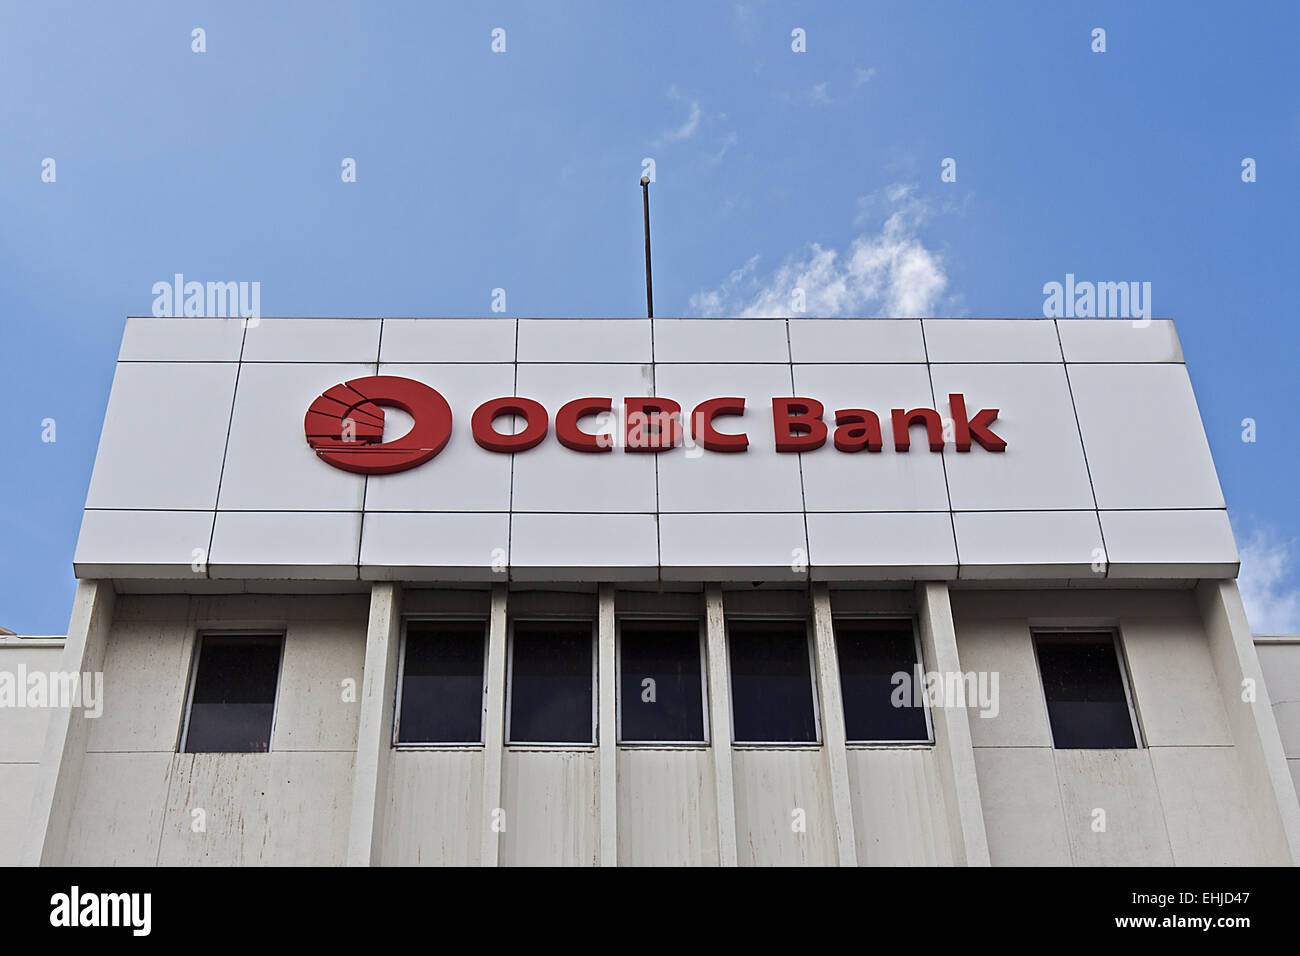 OCBC Bank Stock Photo